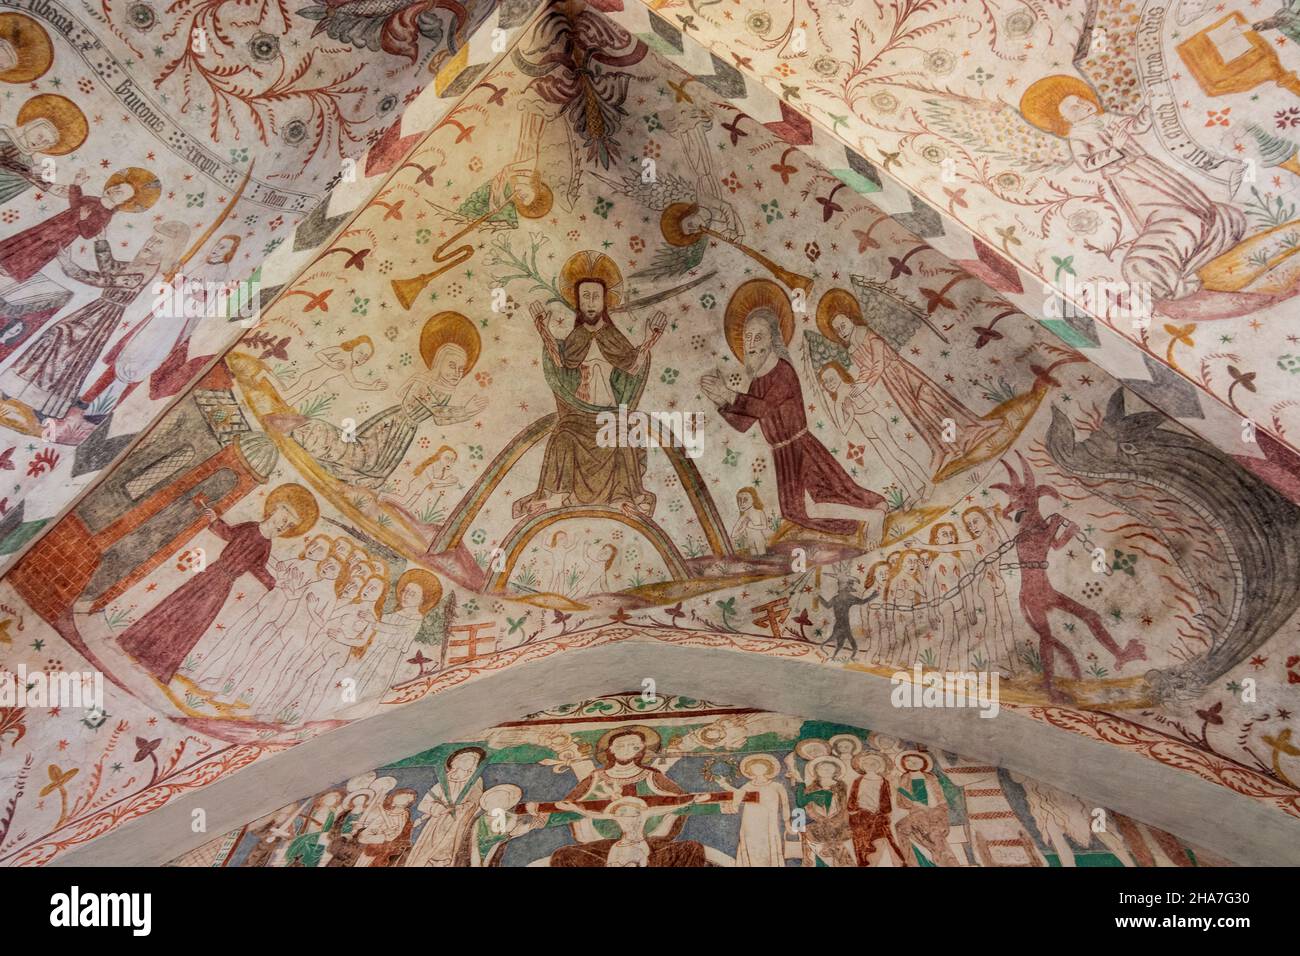 Vordingborg: Chiesa di Keldby, famosa per i suoi affreschi, a Keldby, Moen, Danimarca Foto Stock